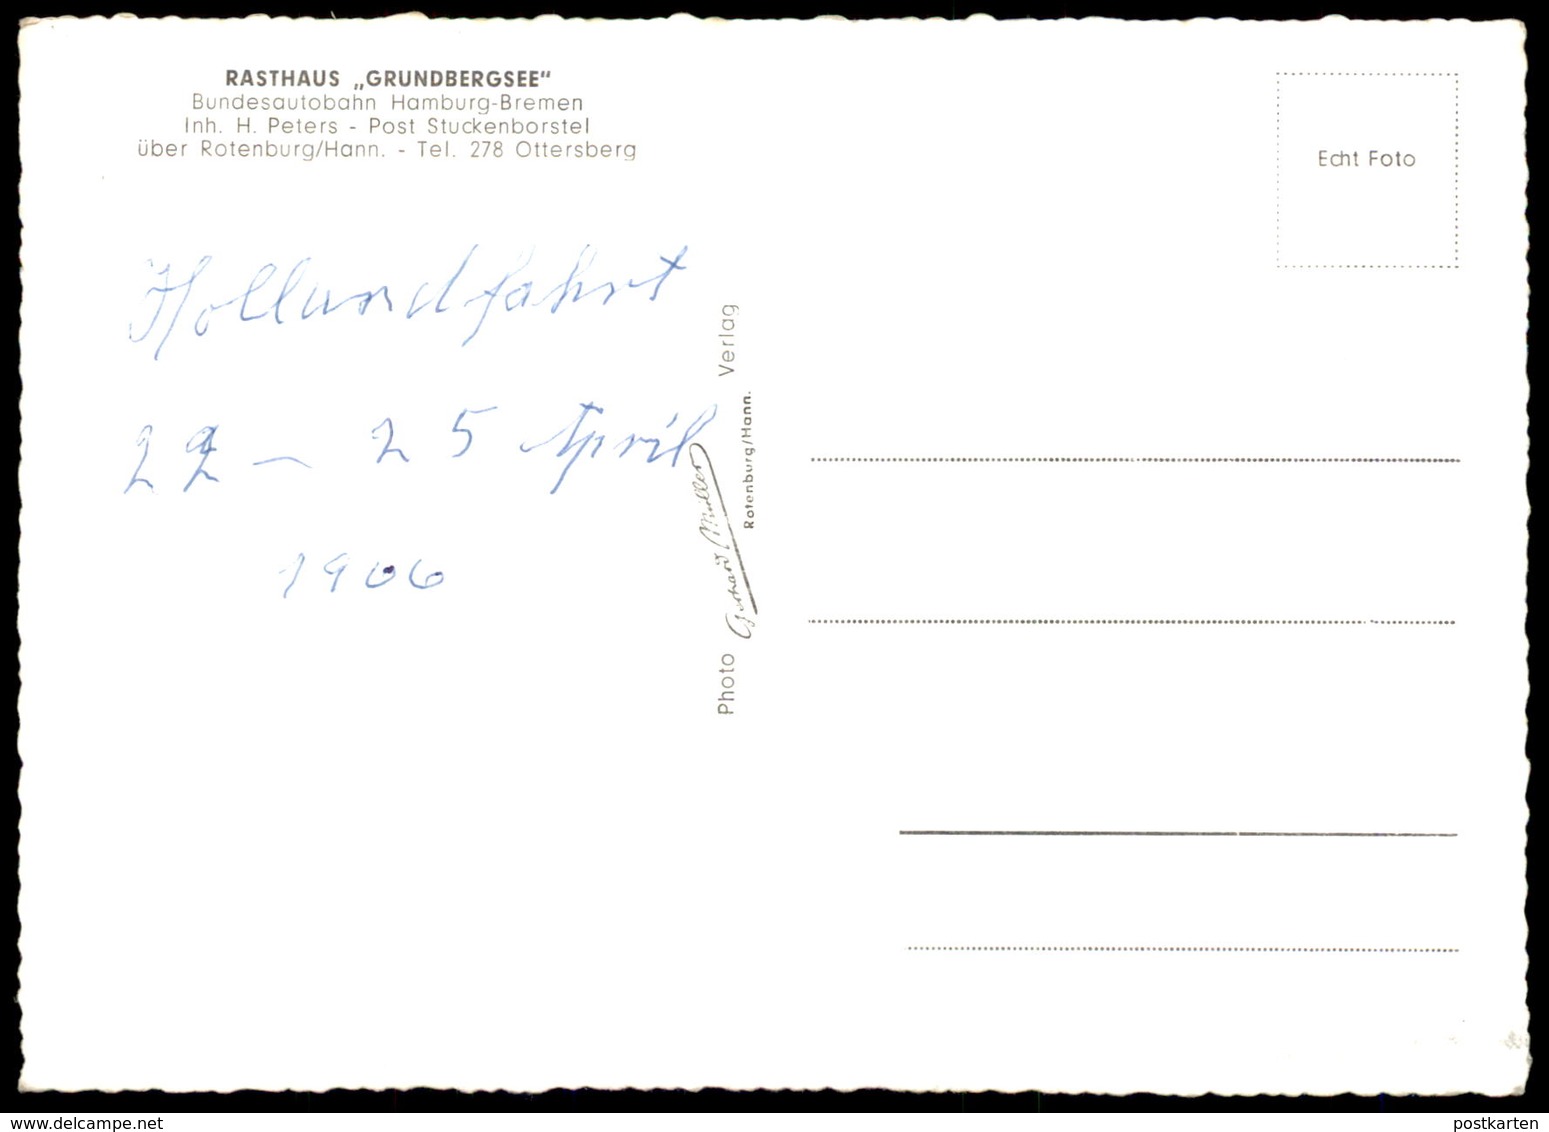 ÄLTERE POSTKARTE AUTOBAHN RASTSTÄTTE GRUNDBERGSEE BAB HAMBURG - BREMEN A1 SOTTRUM OTTERSBERG Ansichtskarte Cpa Postcard - Rotenburg (Wuemme)